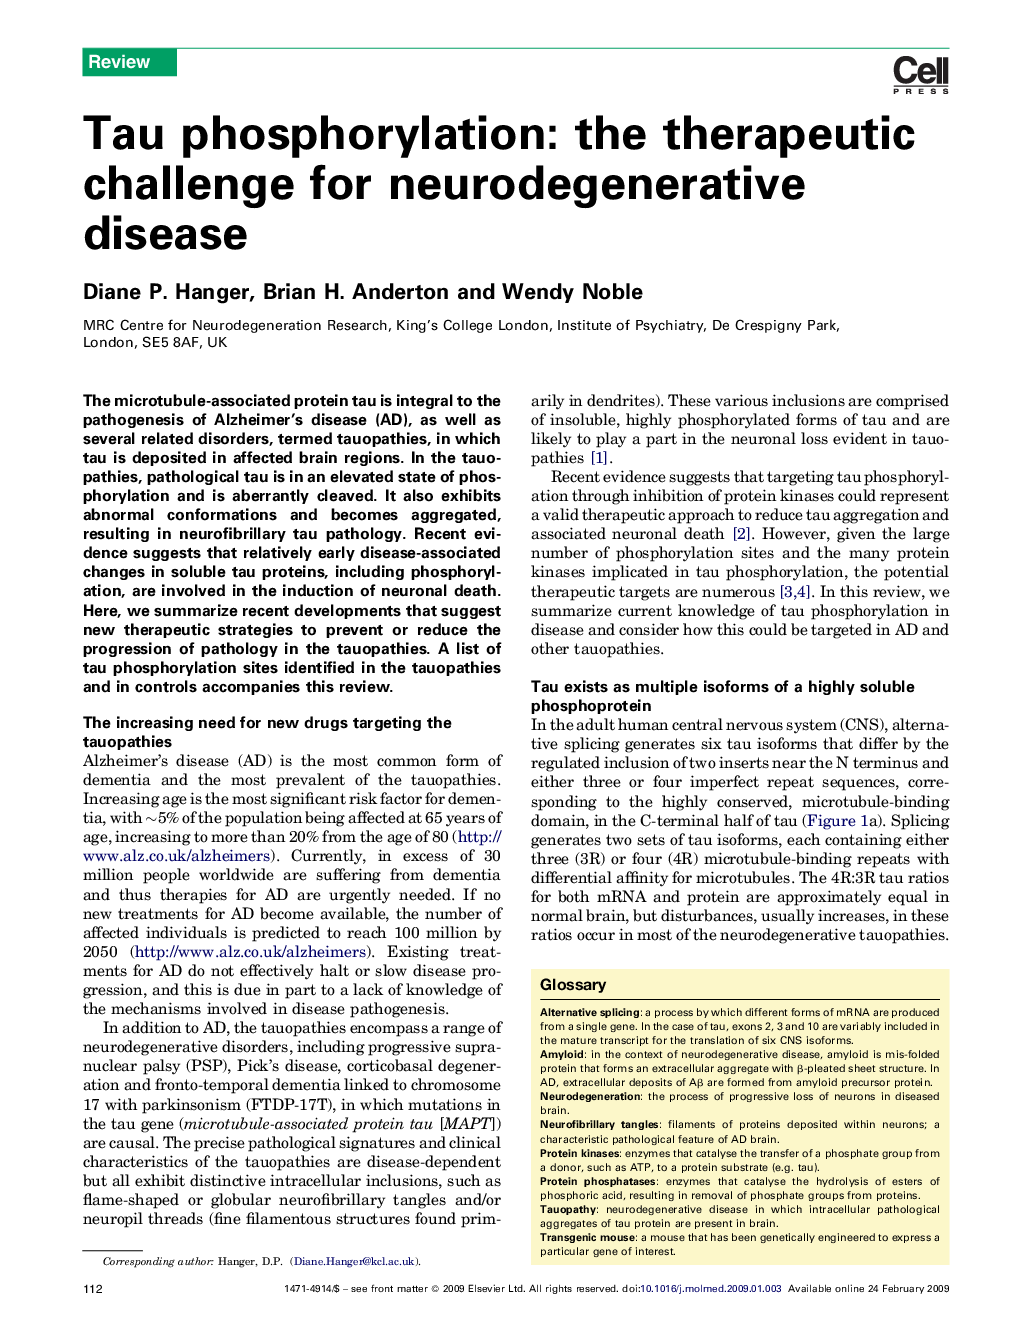 Tau phosphorylation: the therapeutic challenge for neurodegenerative disease